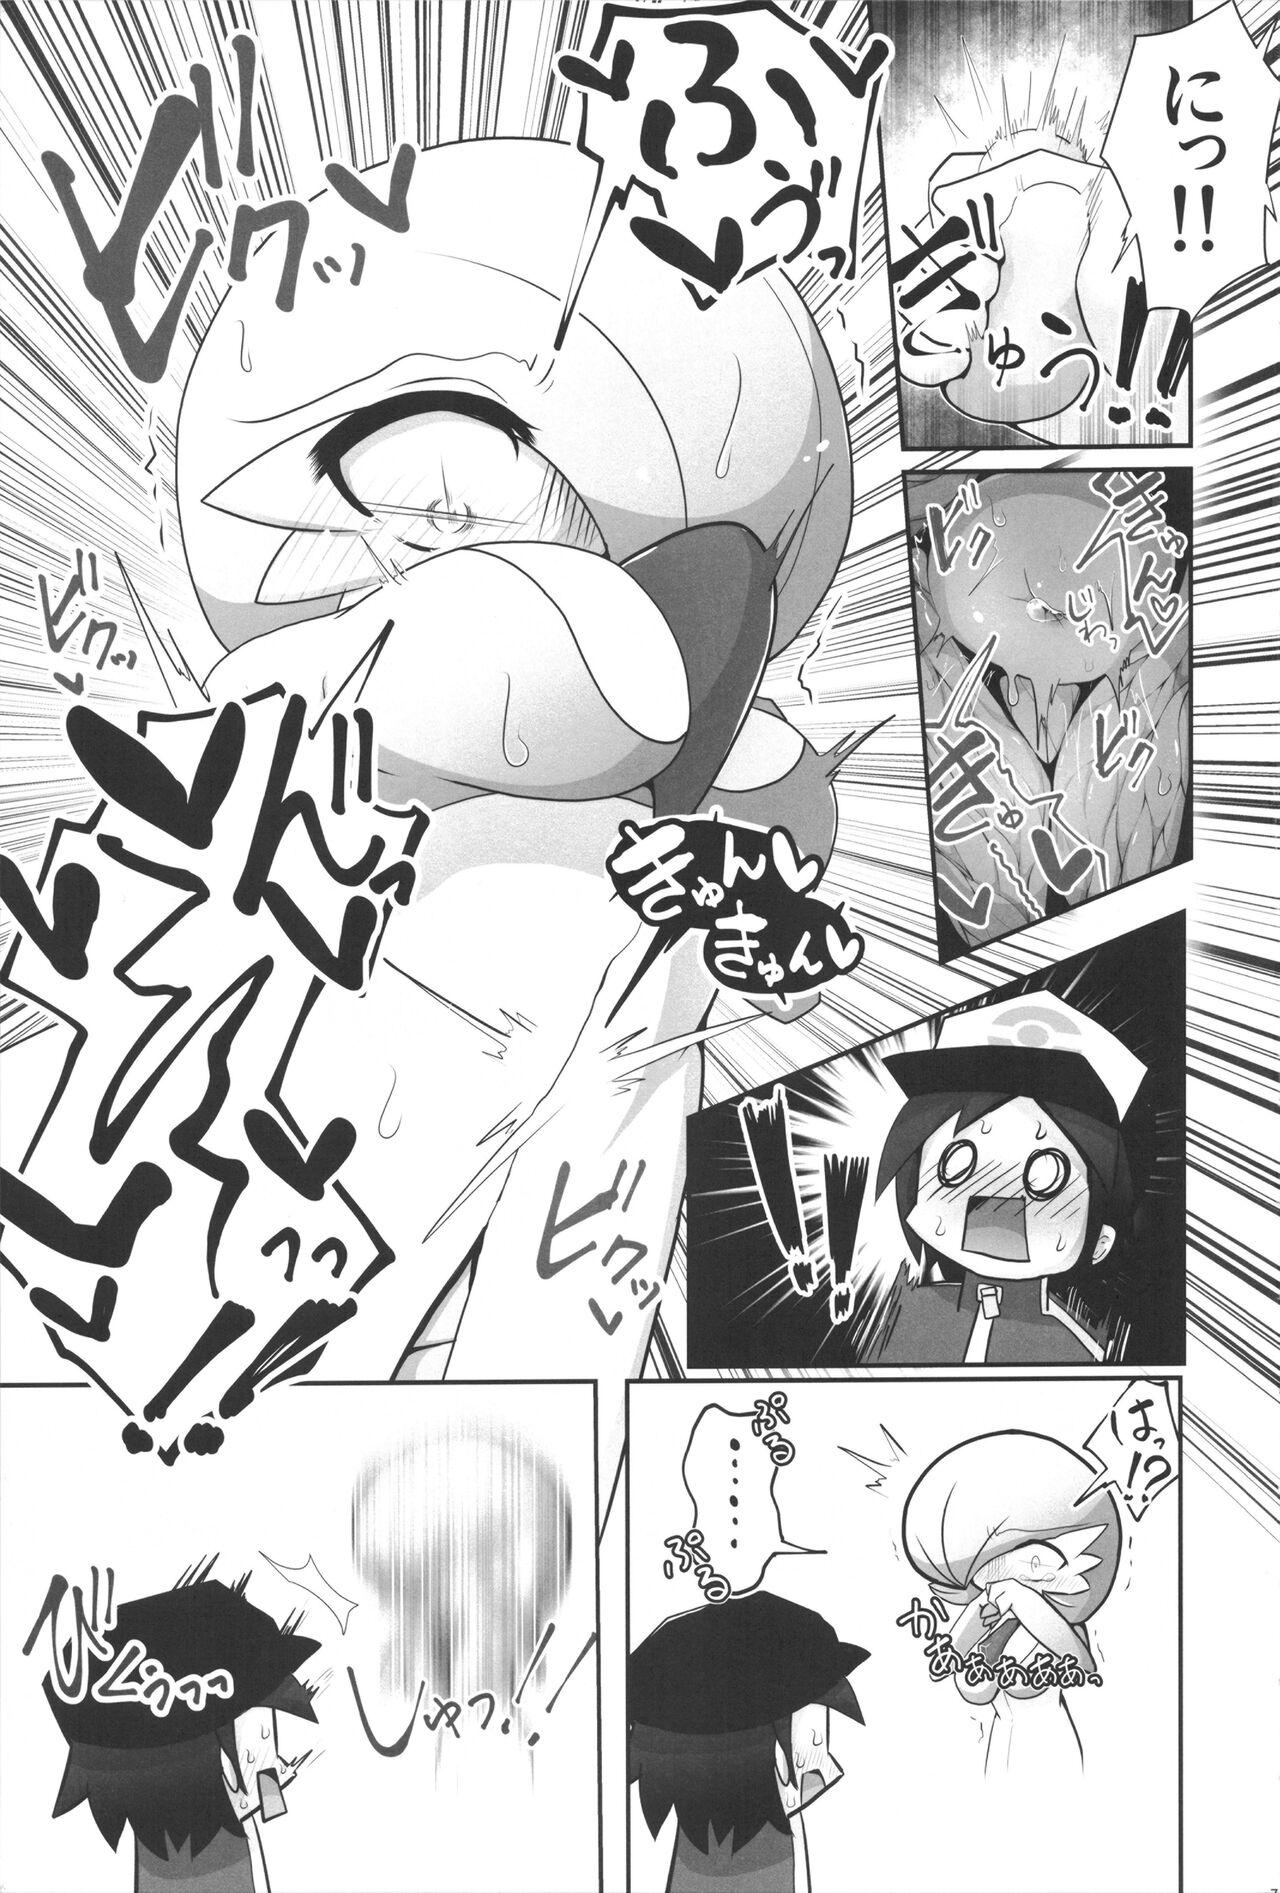 Masterbation Saucy Sana and Synchronization Remake Version - Pokemon | pocket monsters Indo - Page 6